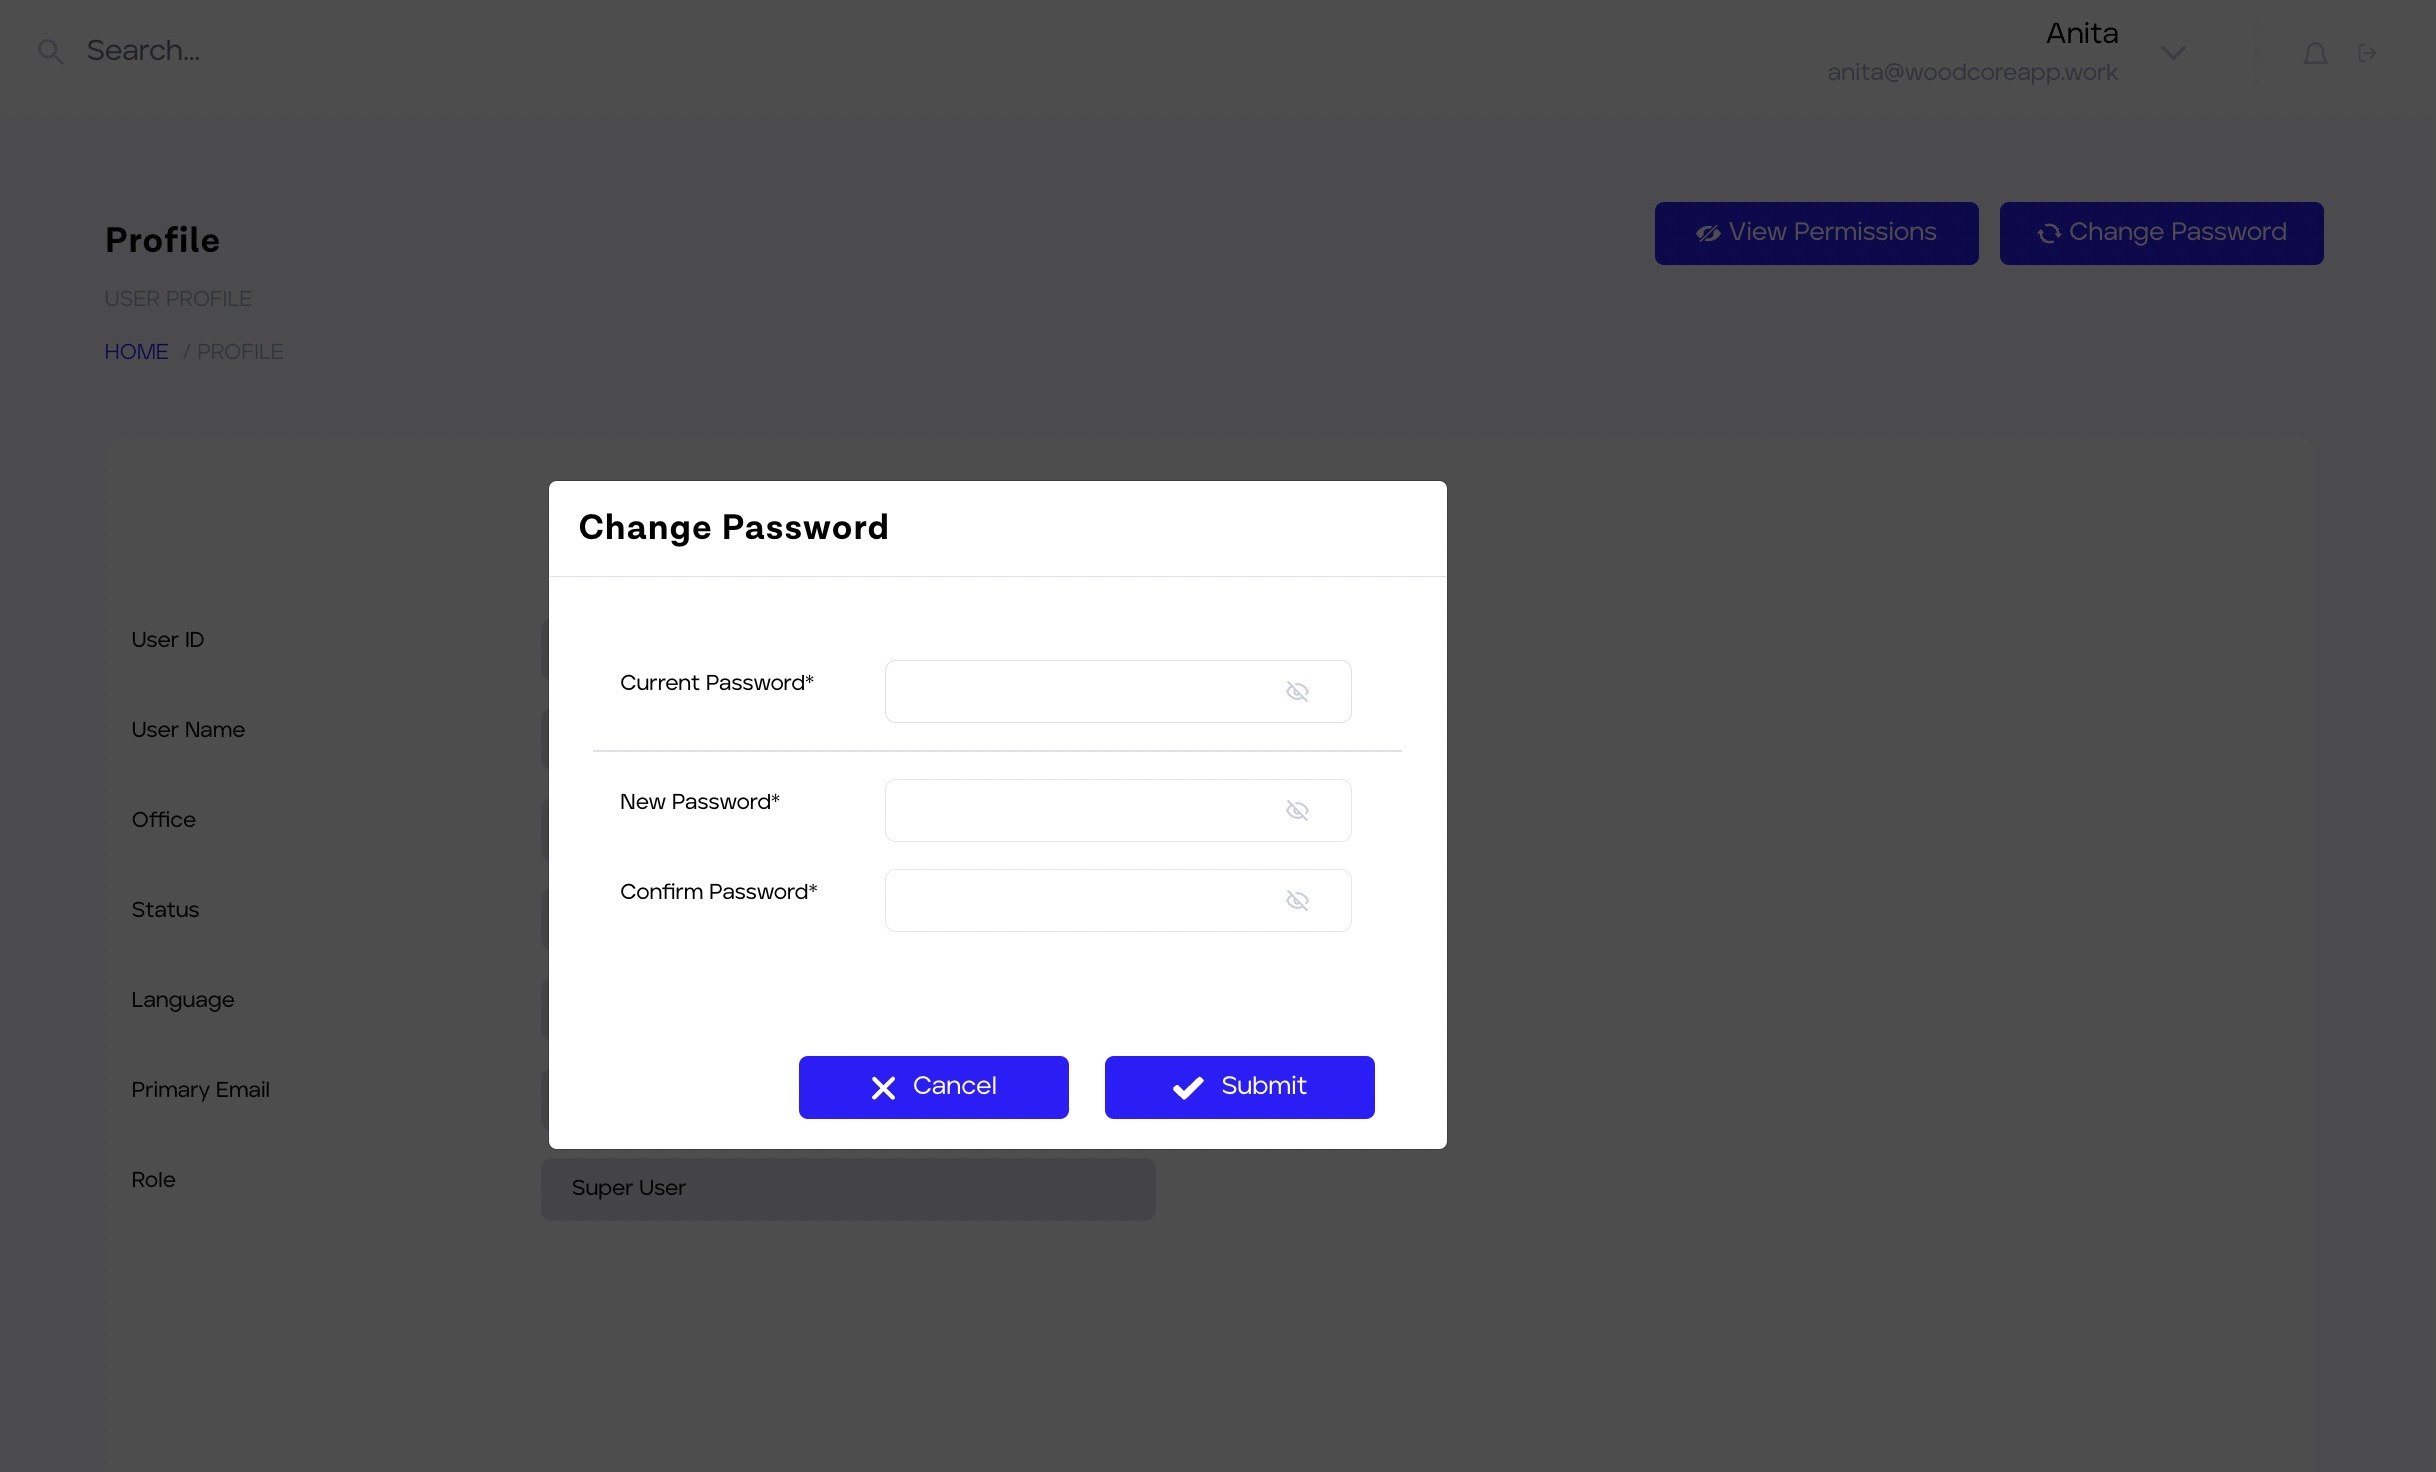 Change Password modal